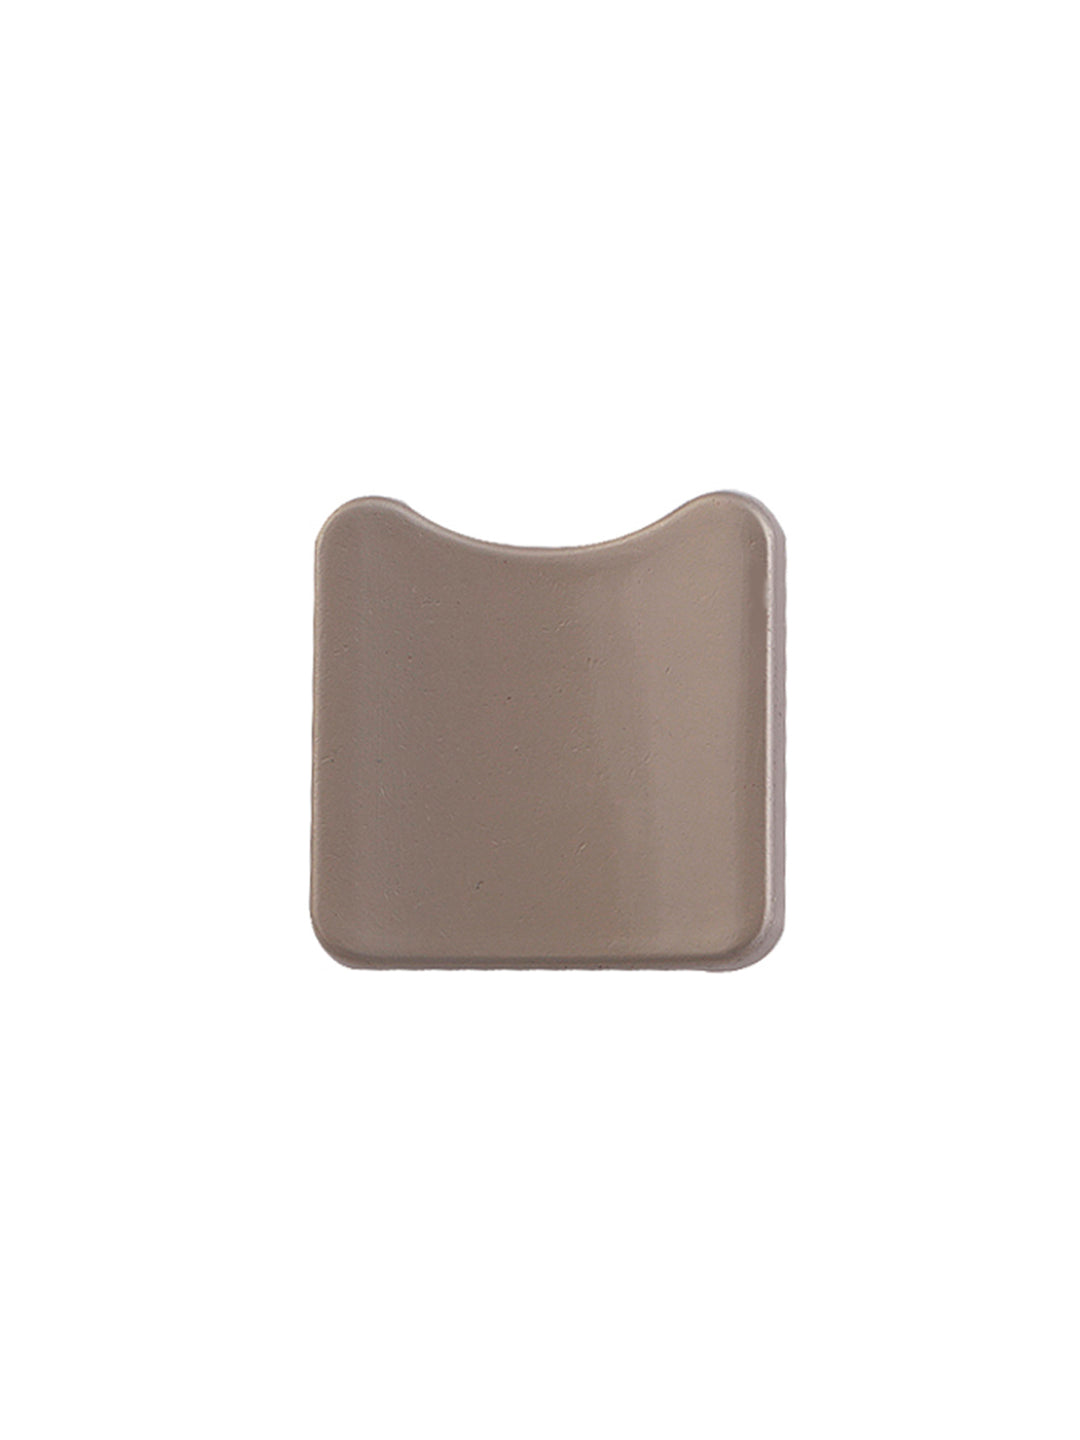 Square Shape Matte Finish Downhole Loop Shank Metal Button in Matte Silver Color